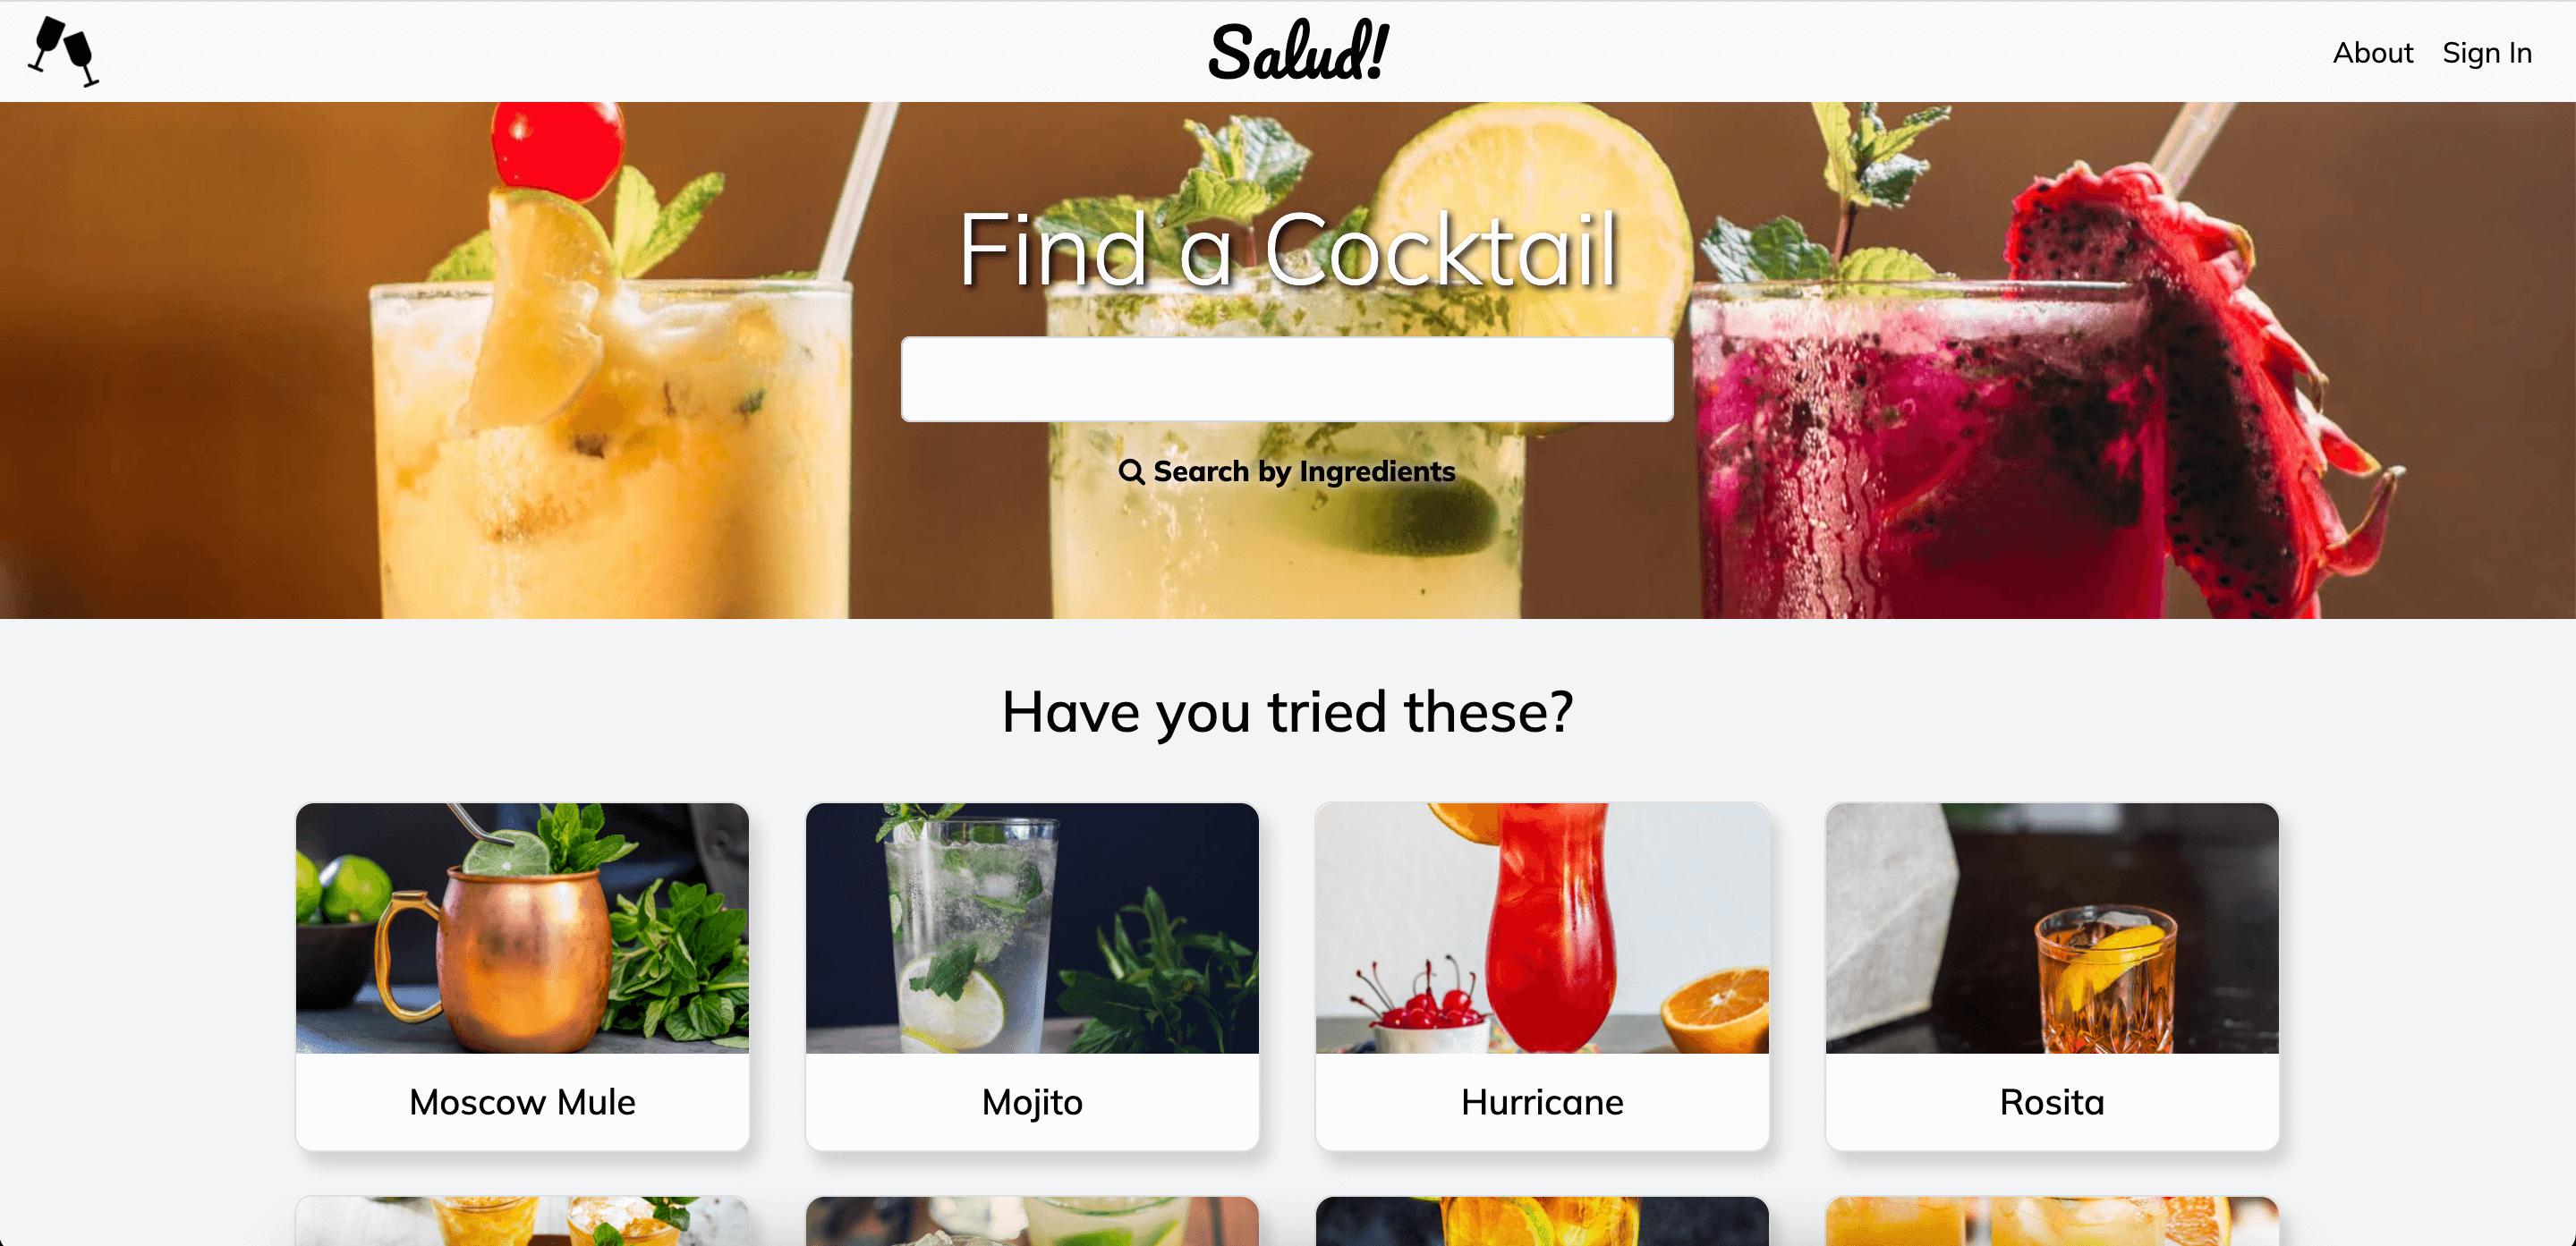 Salud! web application screenshot